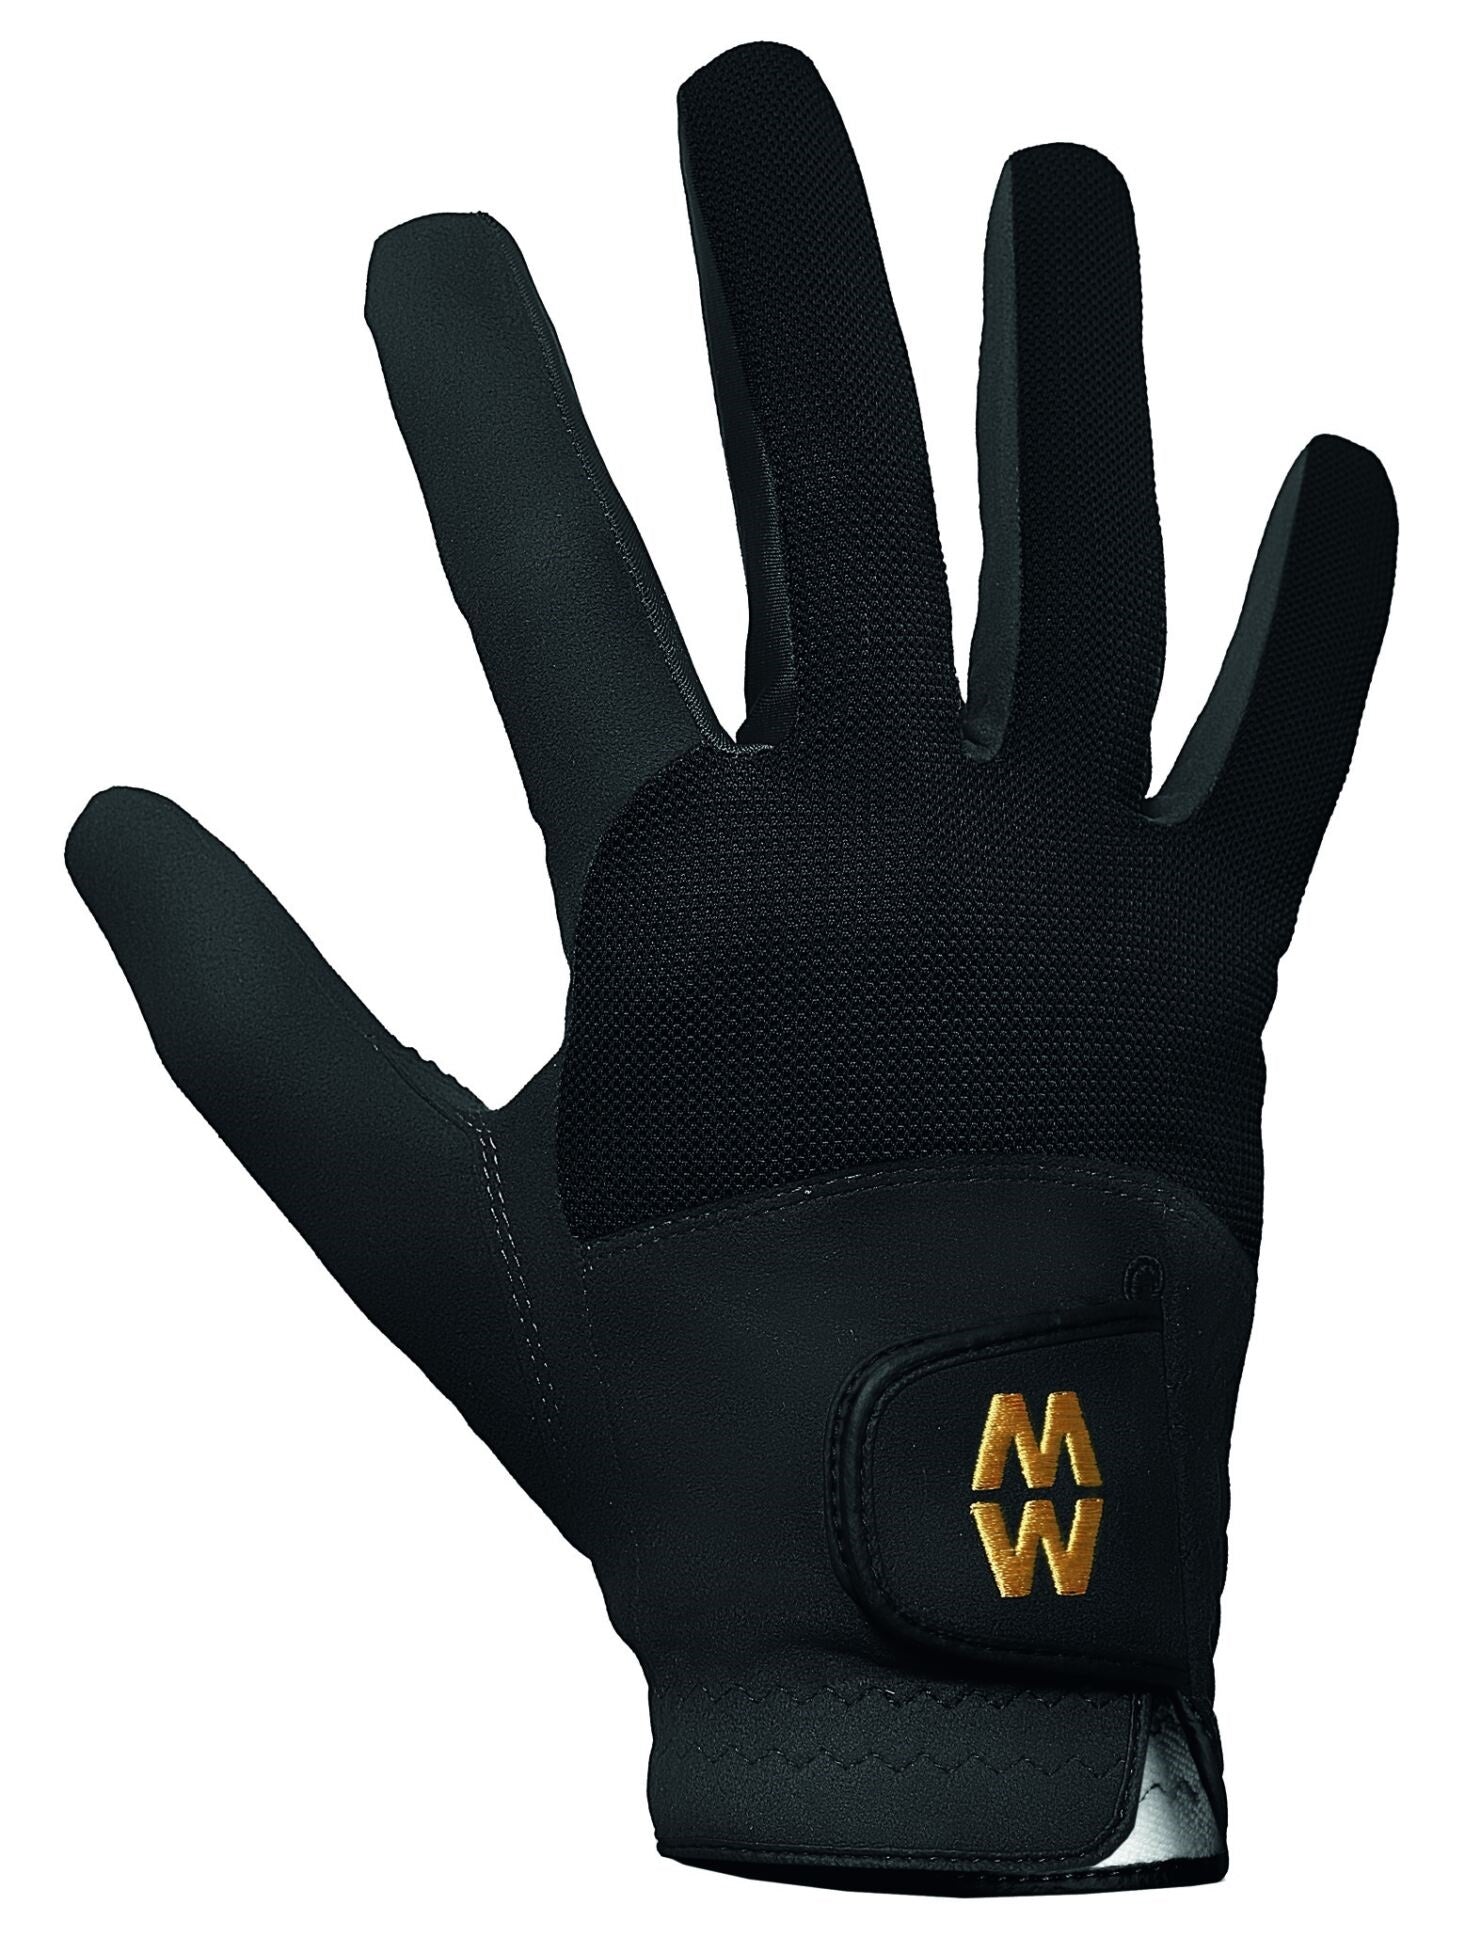 MacWet Micromesh Sports Gloves - Short Cuff - Black